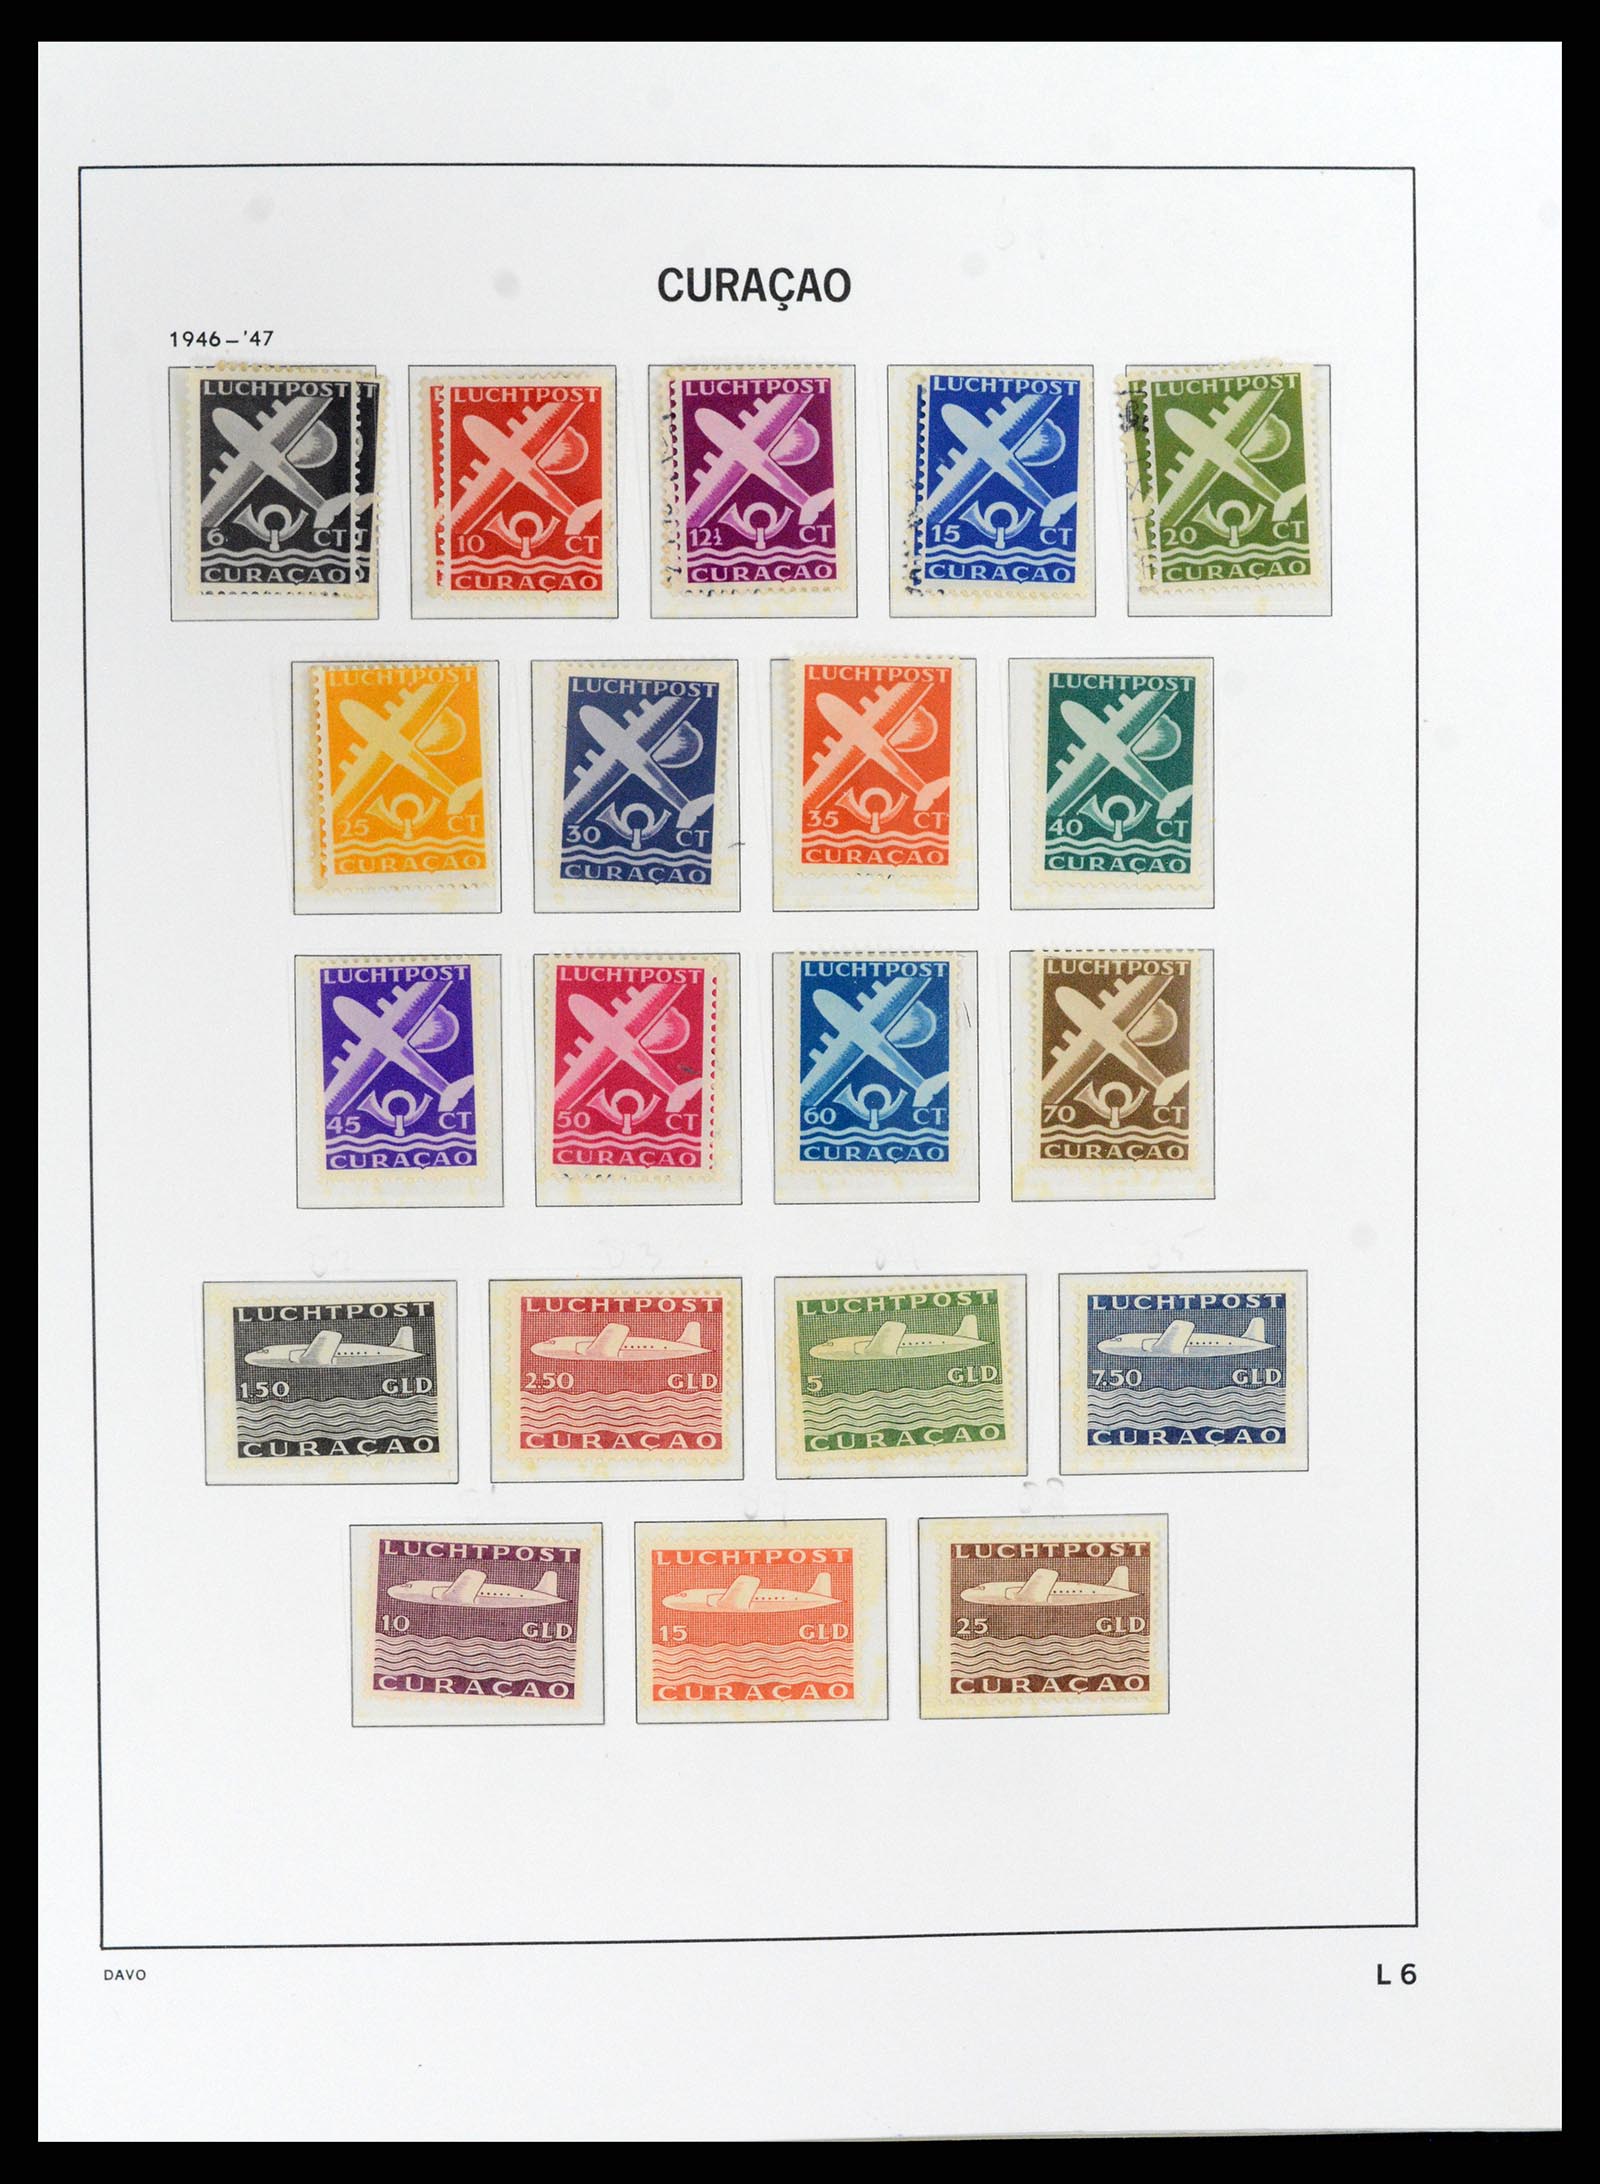 37844 066 - Stamp Collection 37844 Curaçao/Antilles 1873-2010.